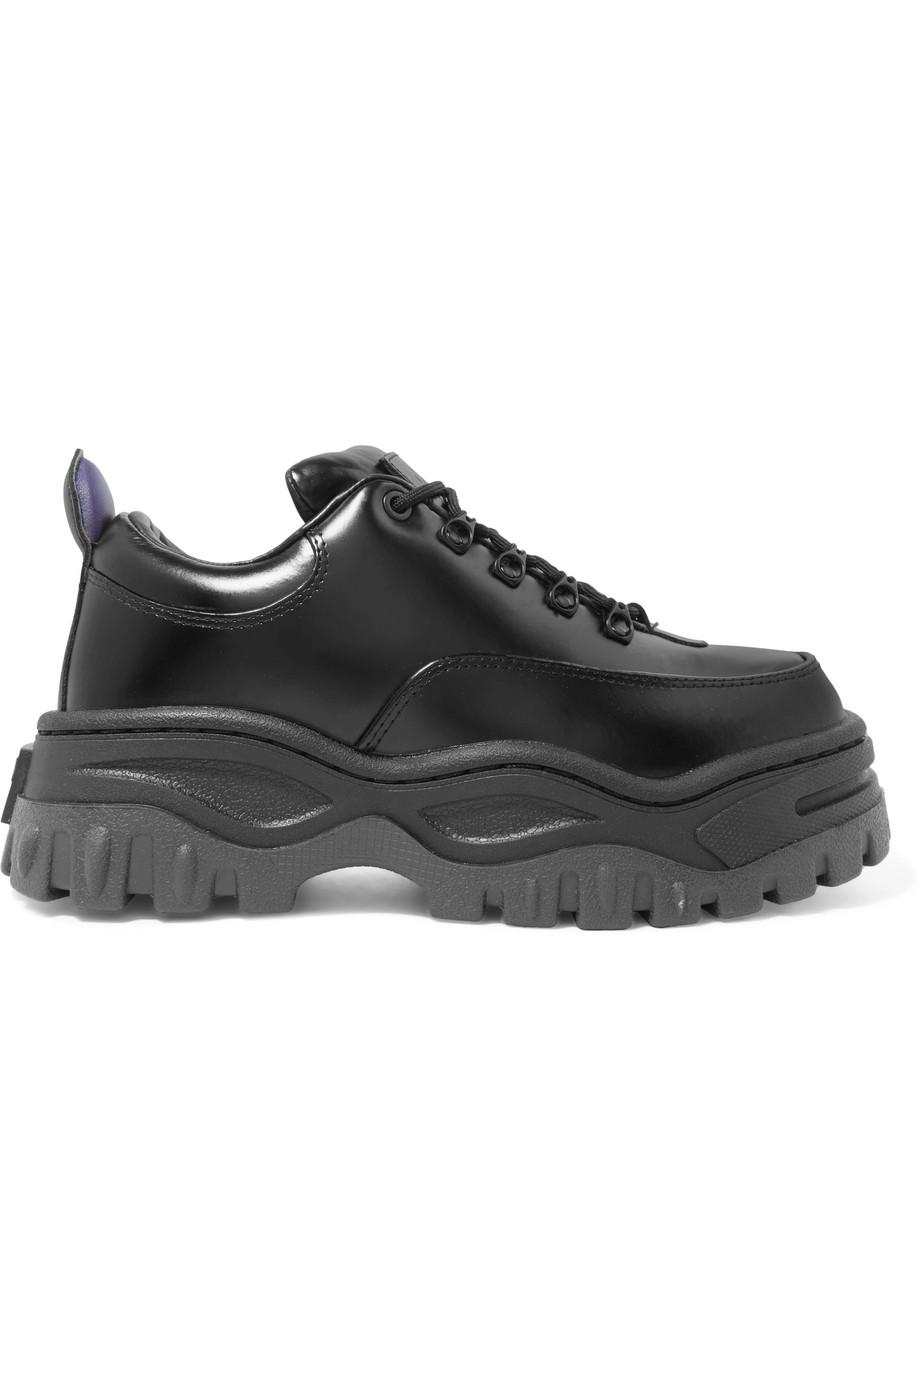 ugly black shoes